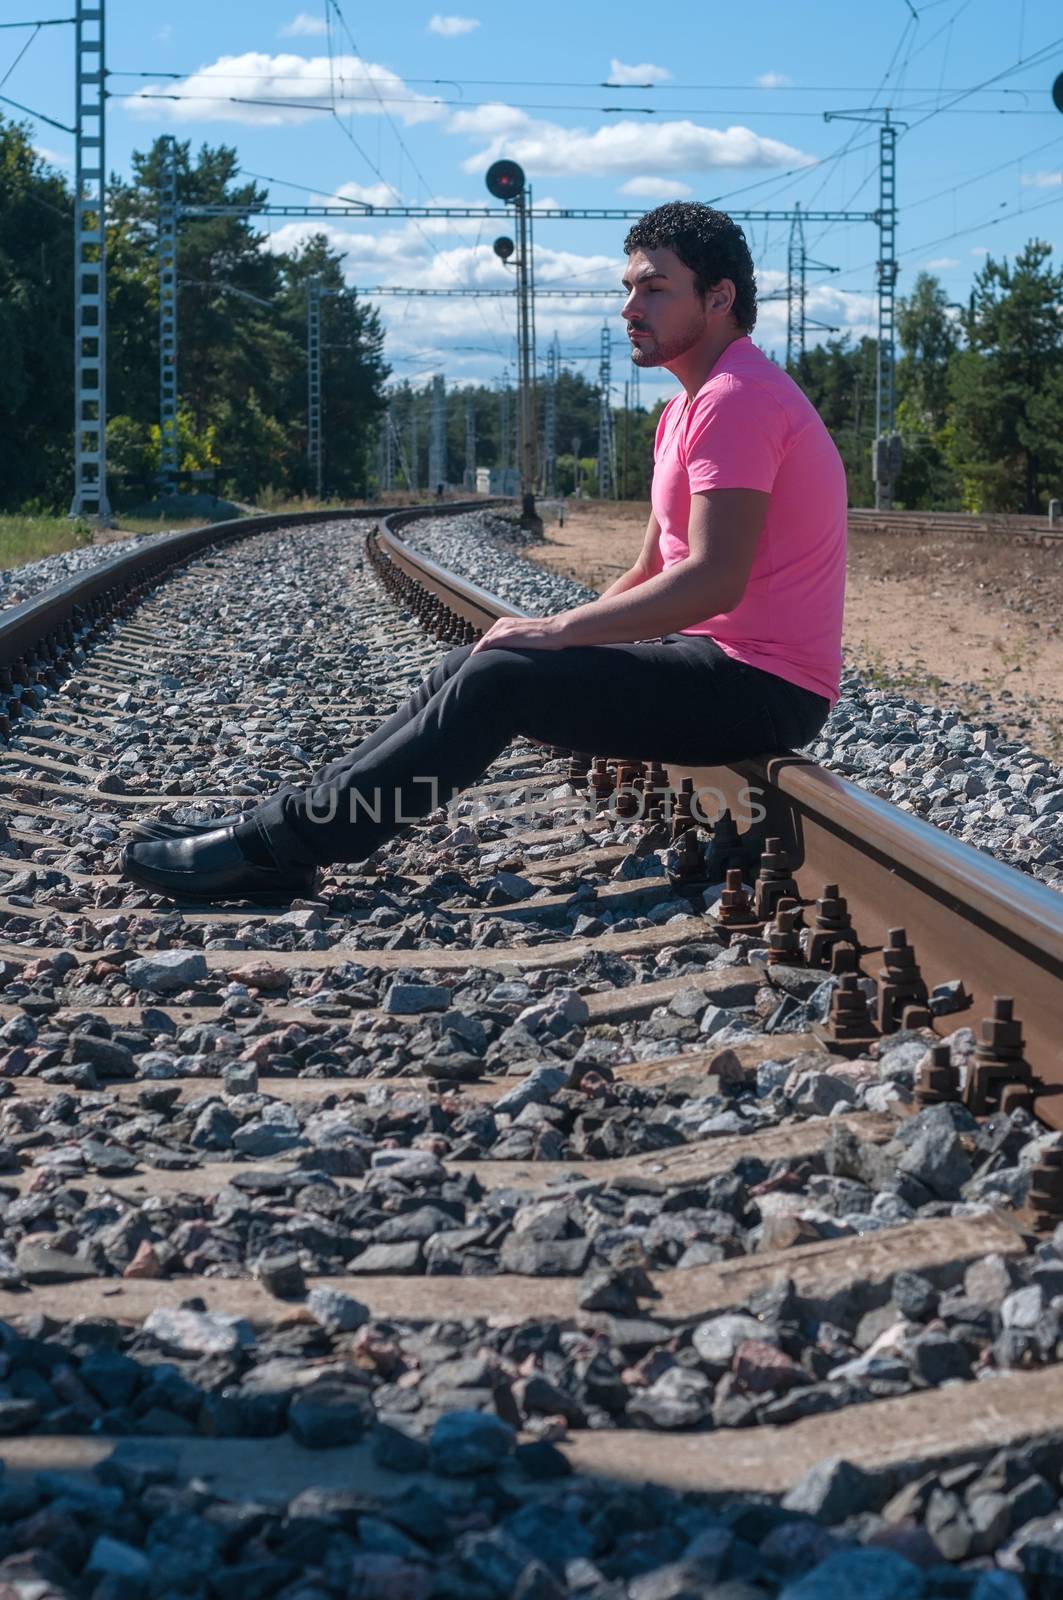 Shot of single man in pink t-shirt sitting on train tracks